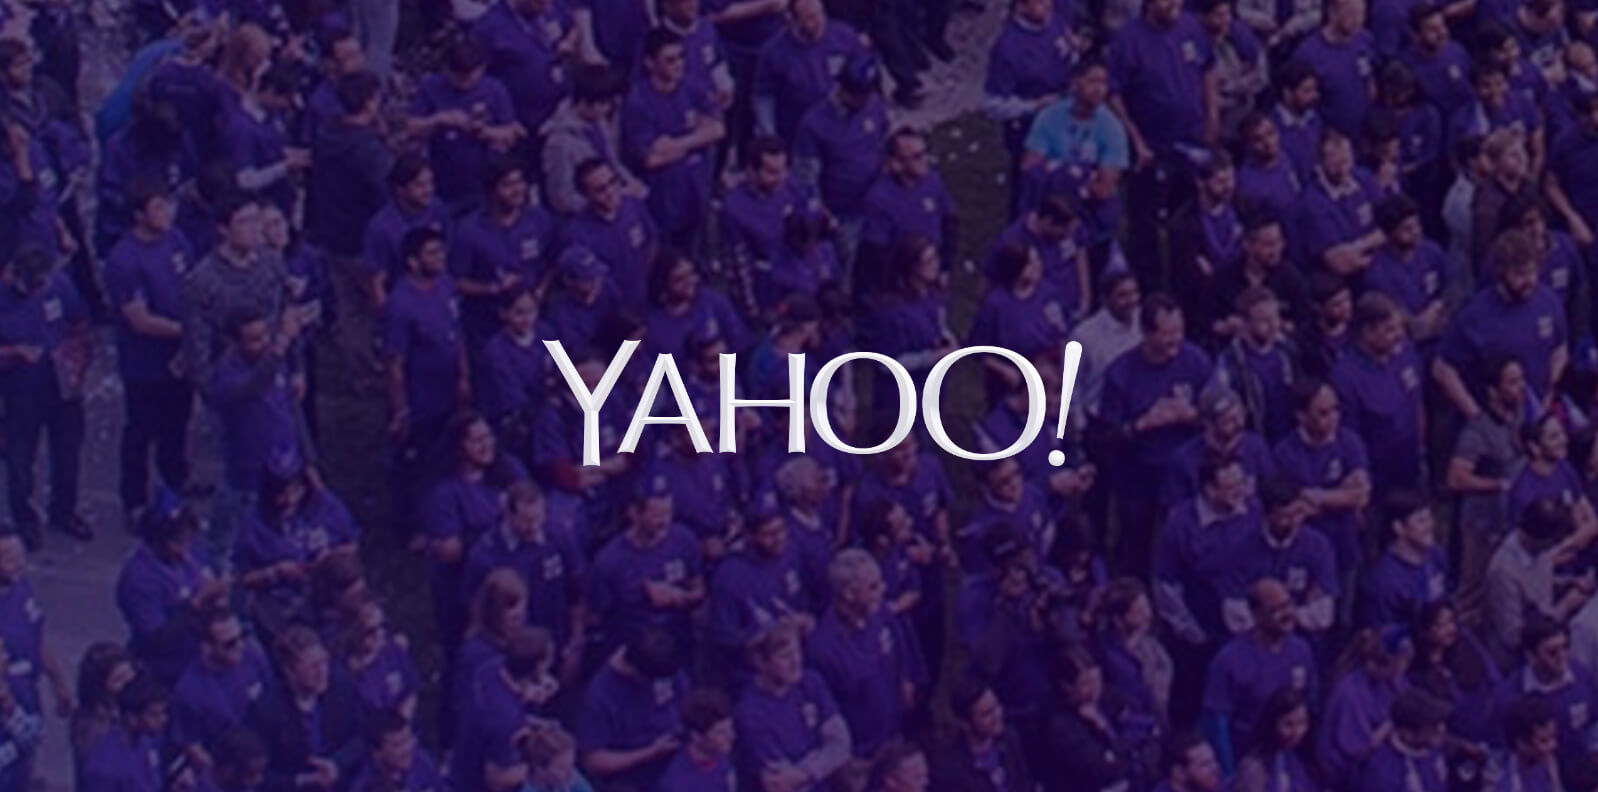 Yahoo says 1 billion user accounts have been hacked